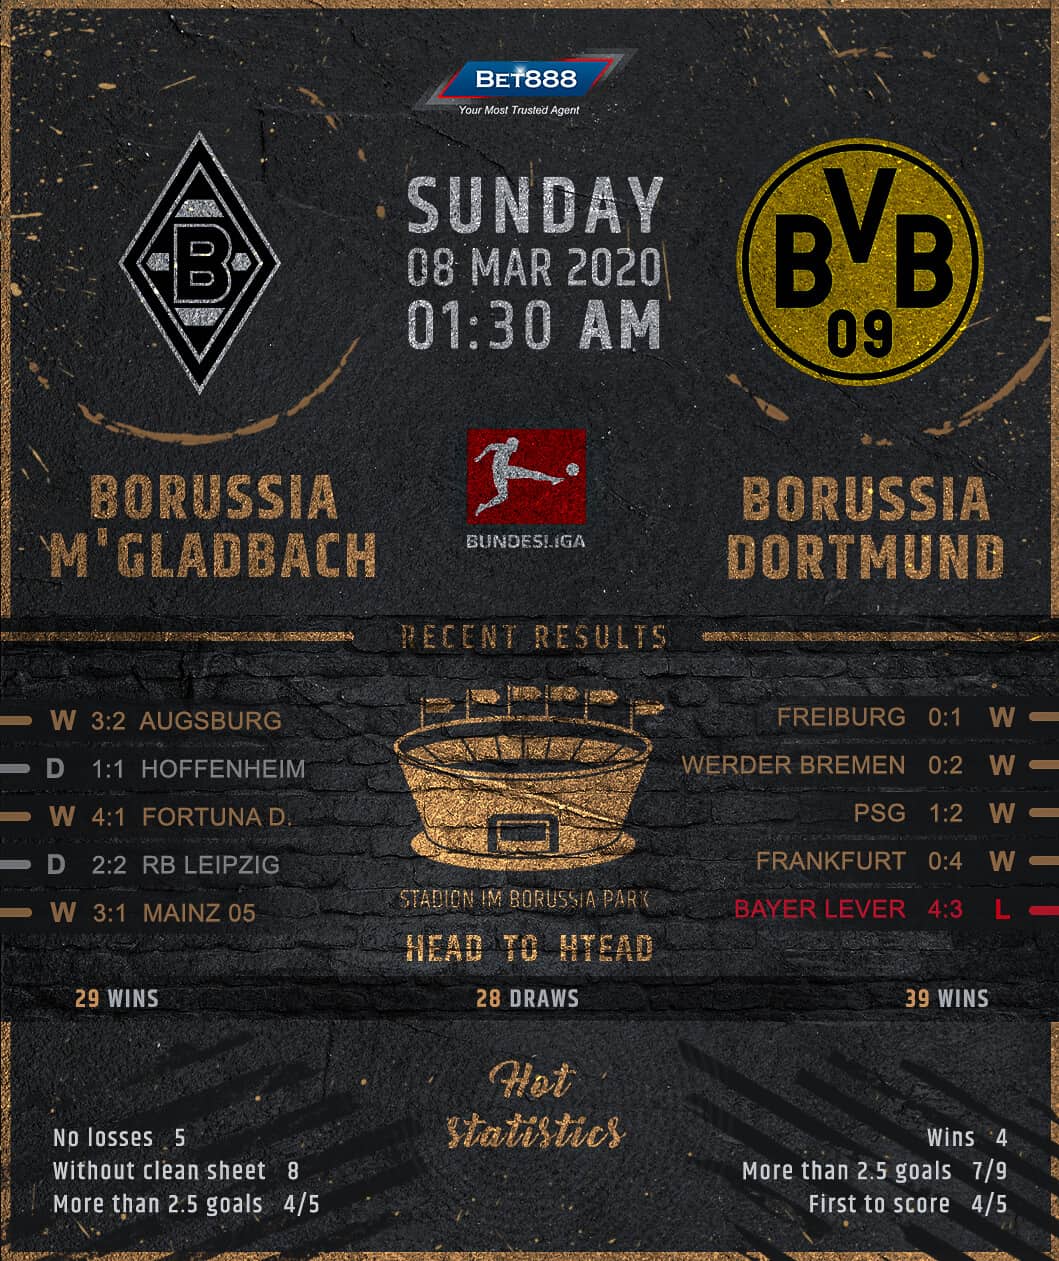 Borussia Mönchengladbach vs Borussia Dortmund﻿ 08/03/20